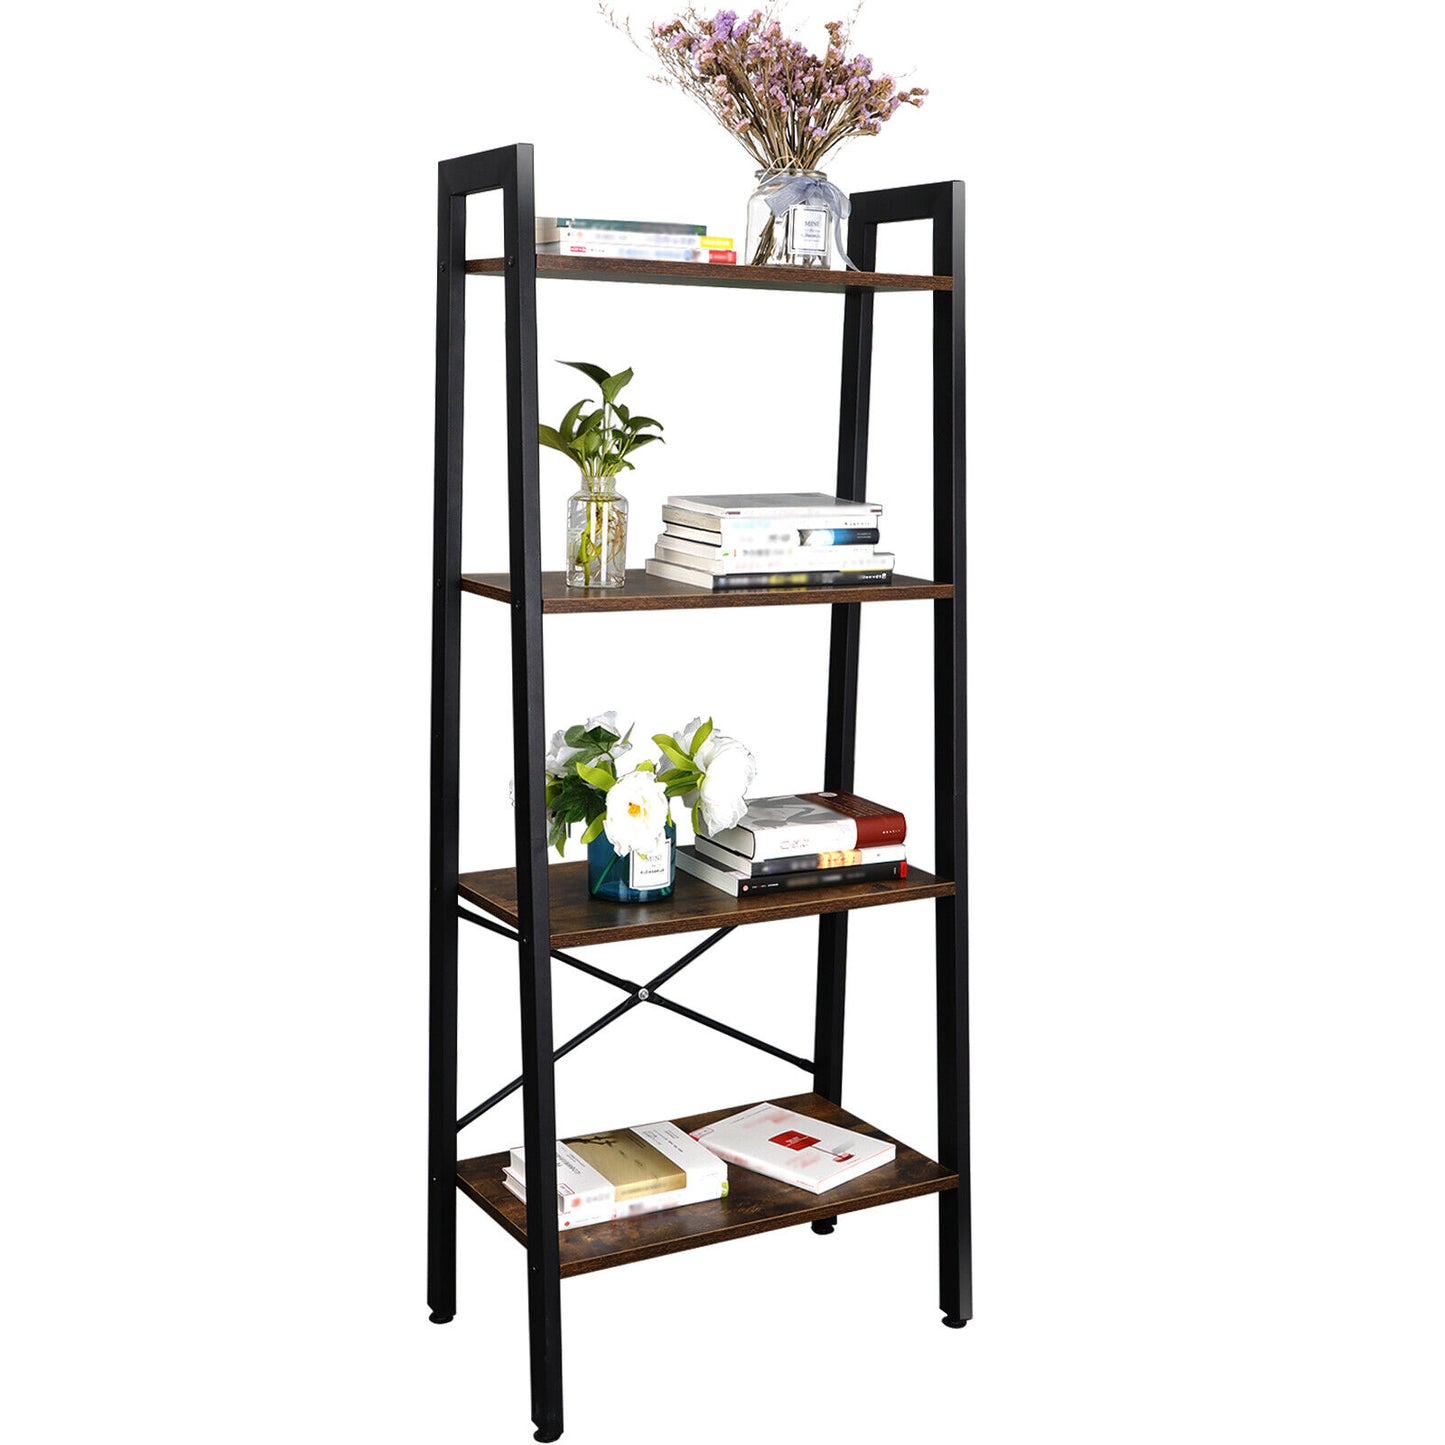 4-Tier Ladder Shelf Bookshelf Bookcase Storage Rack Plant Flower Stand Storage